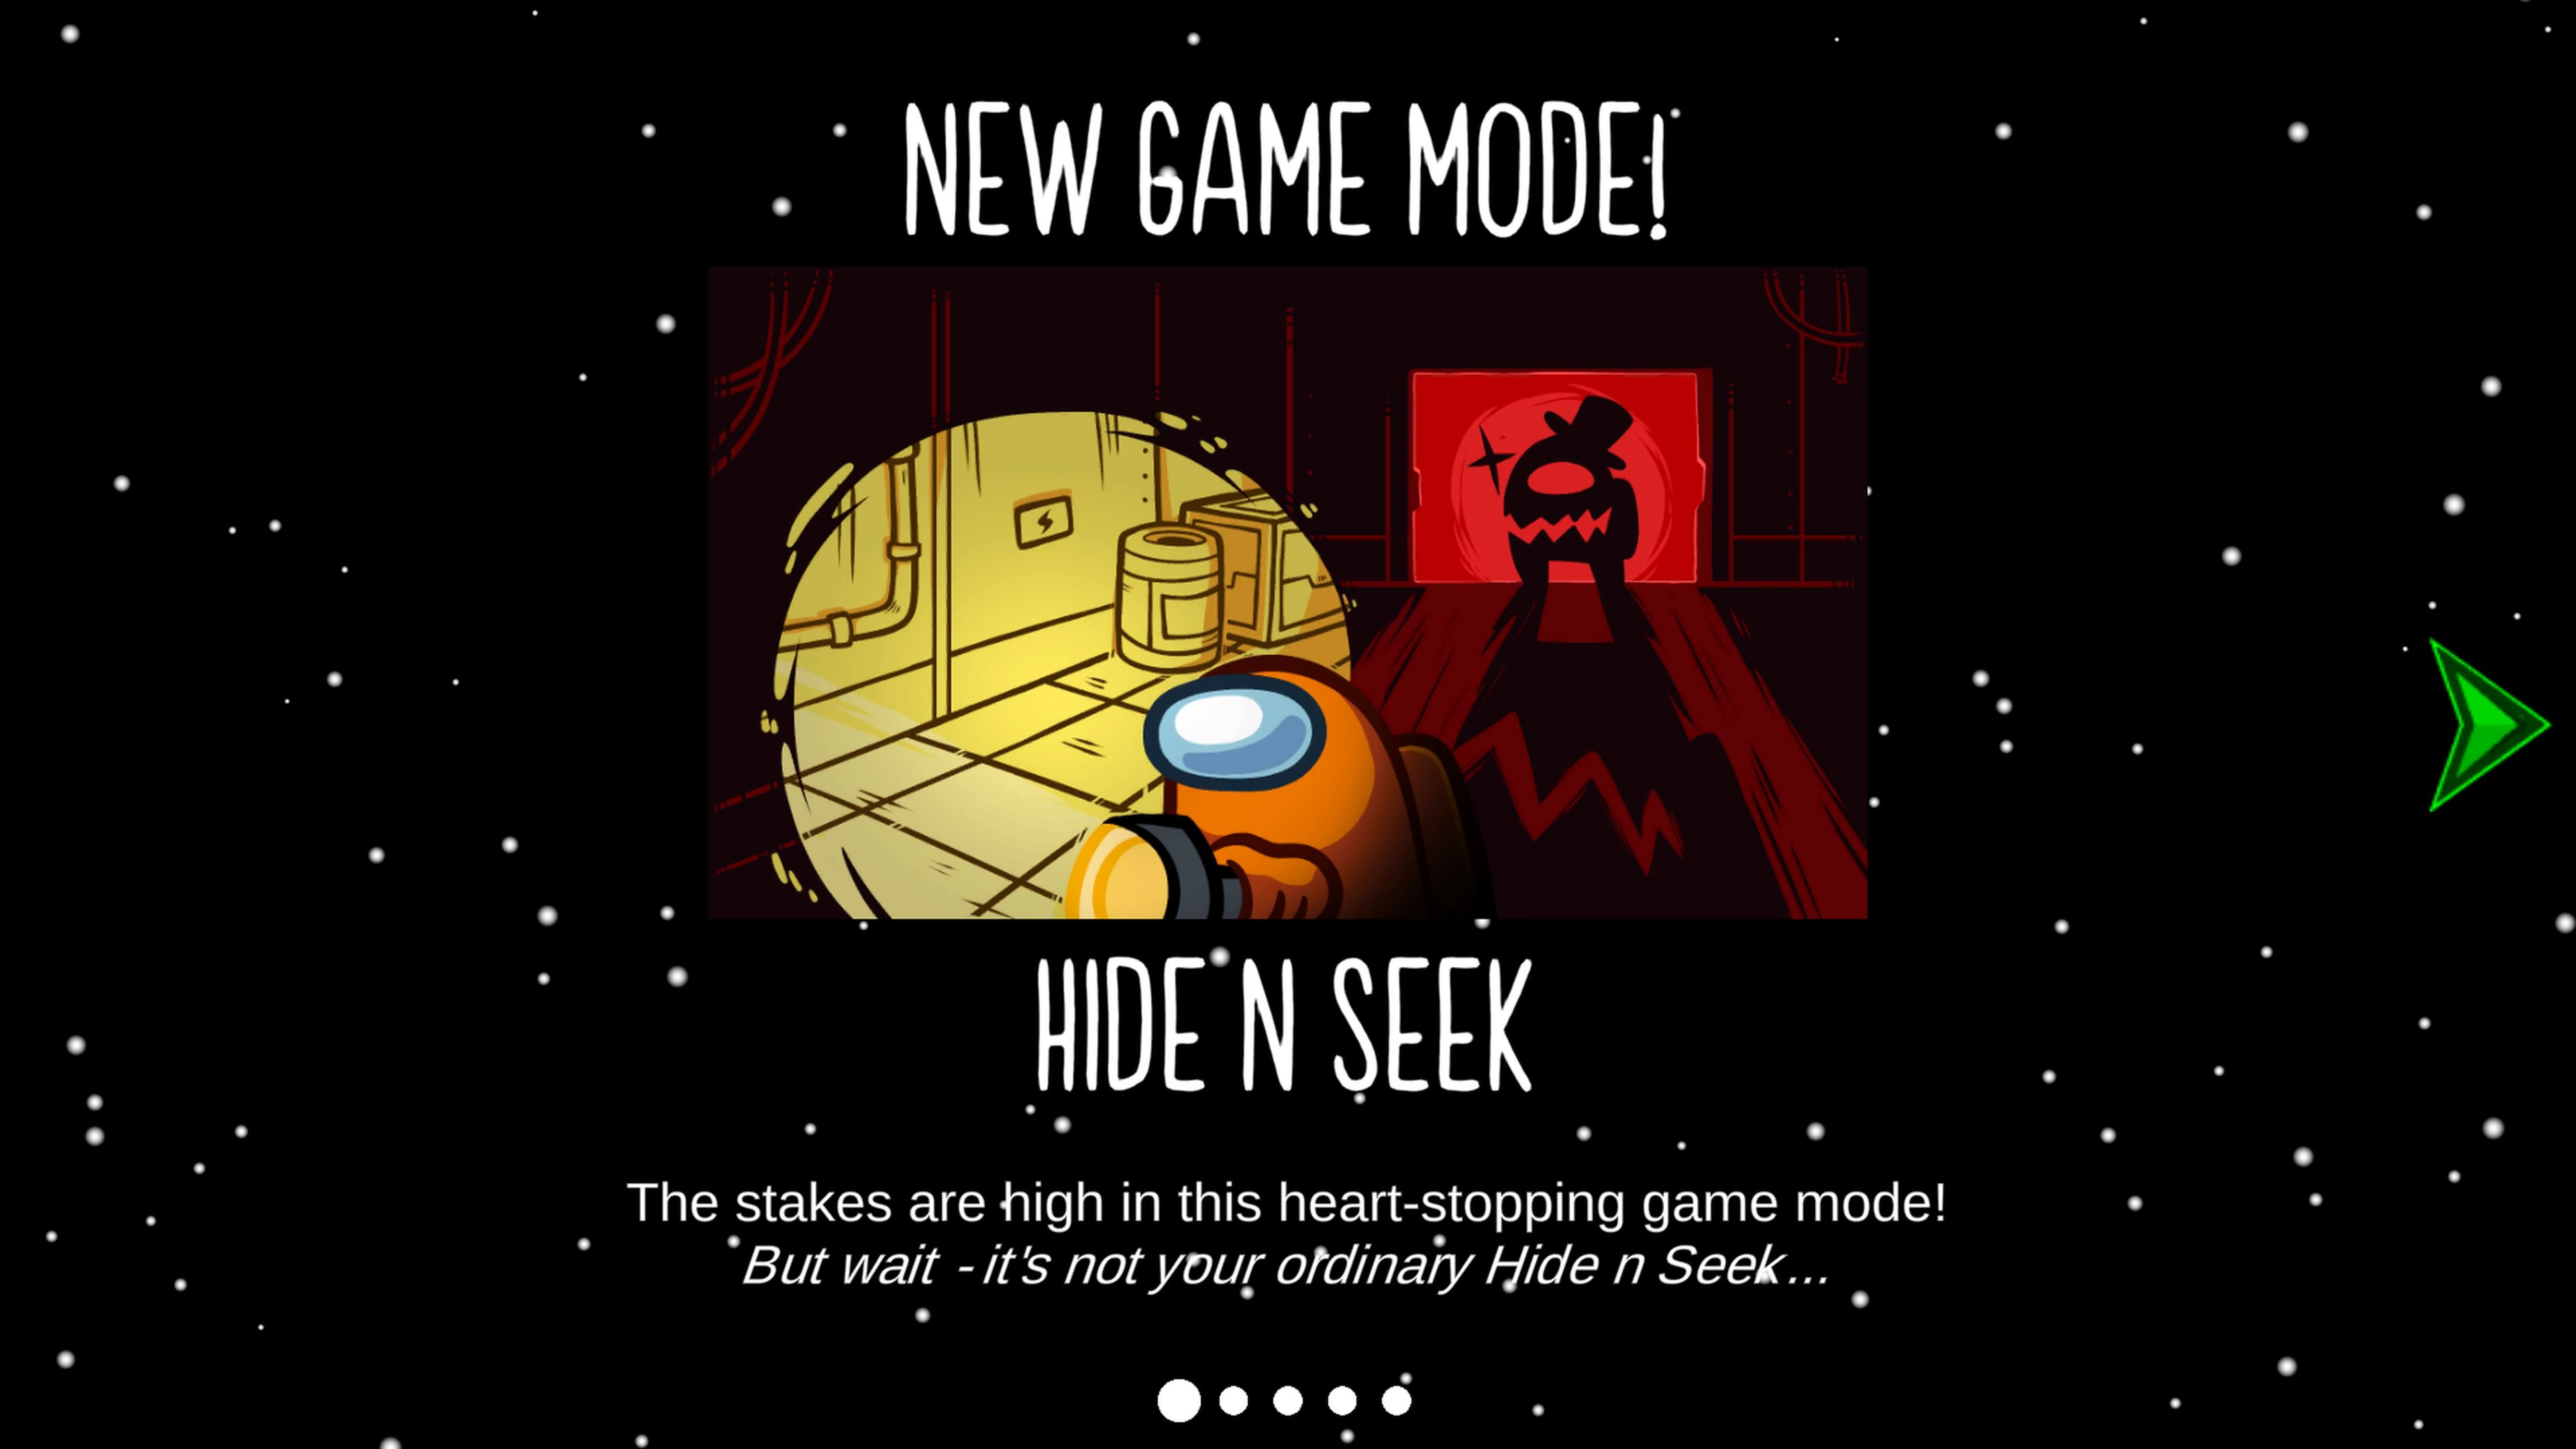 Among Us Hide and Seek - Play Among Us Hide and Seek Game Online